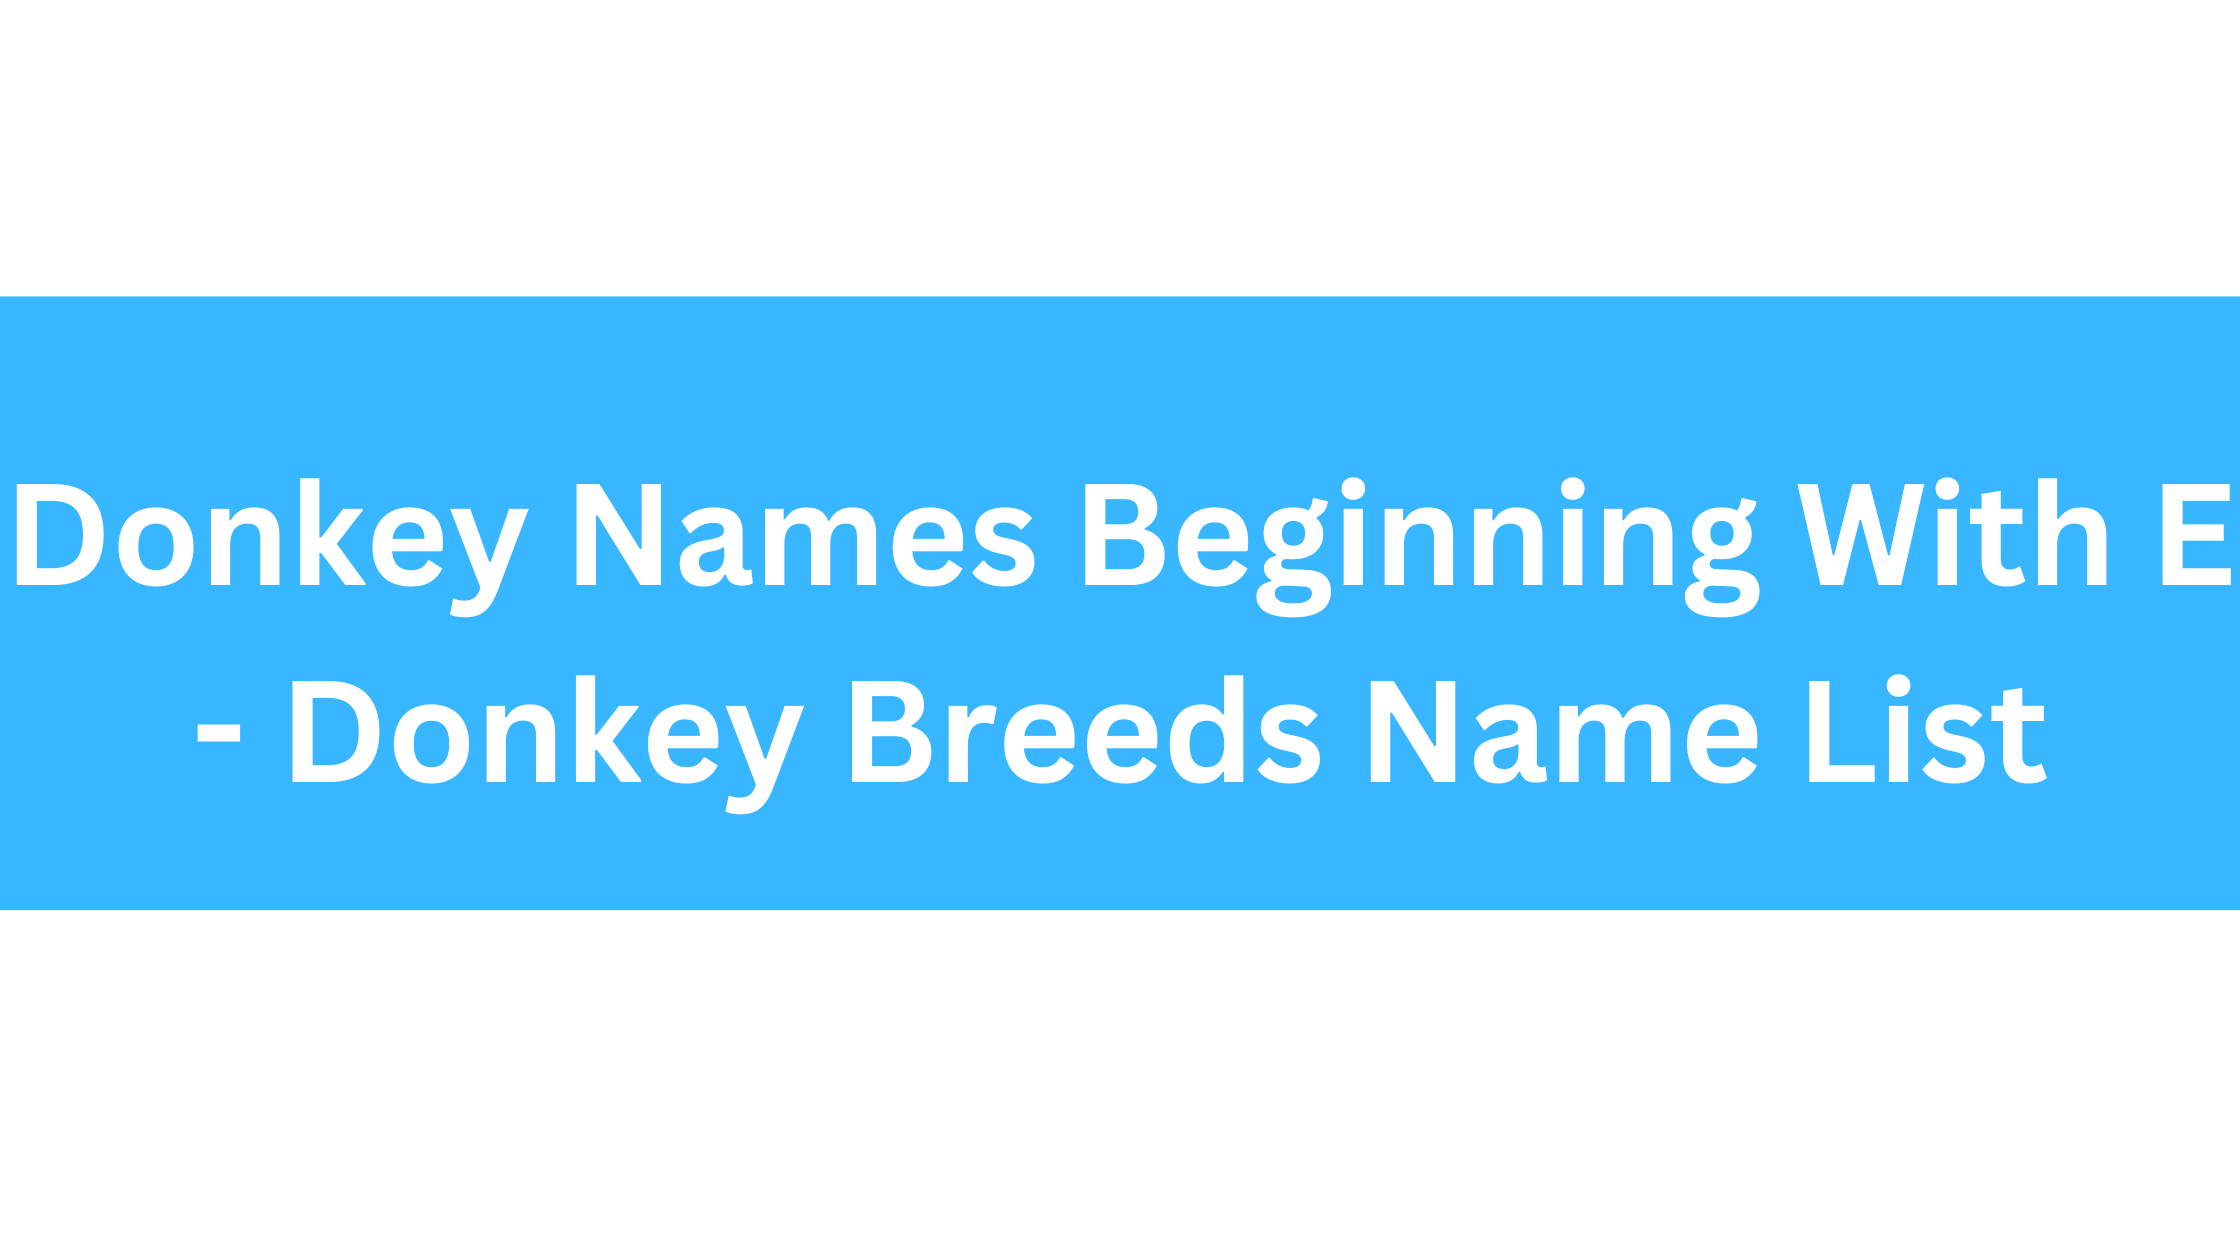 Donkey Names Beginning With E